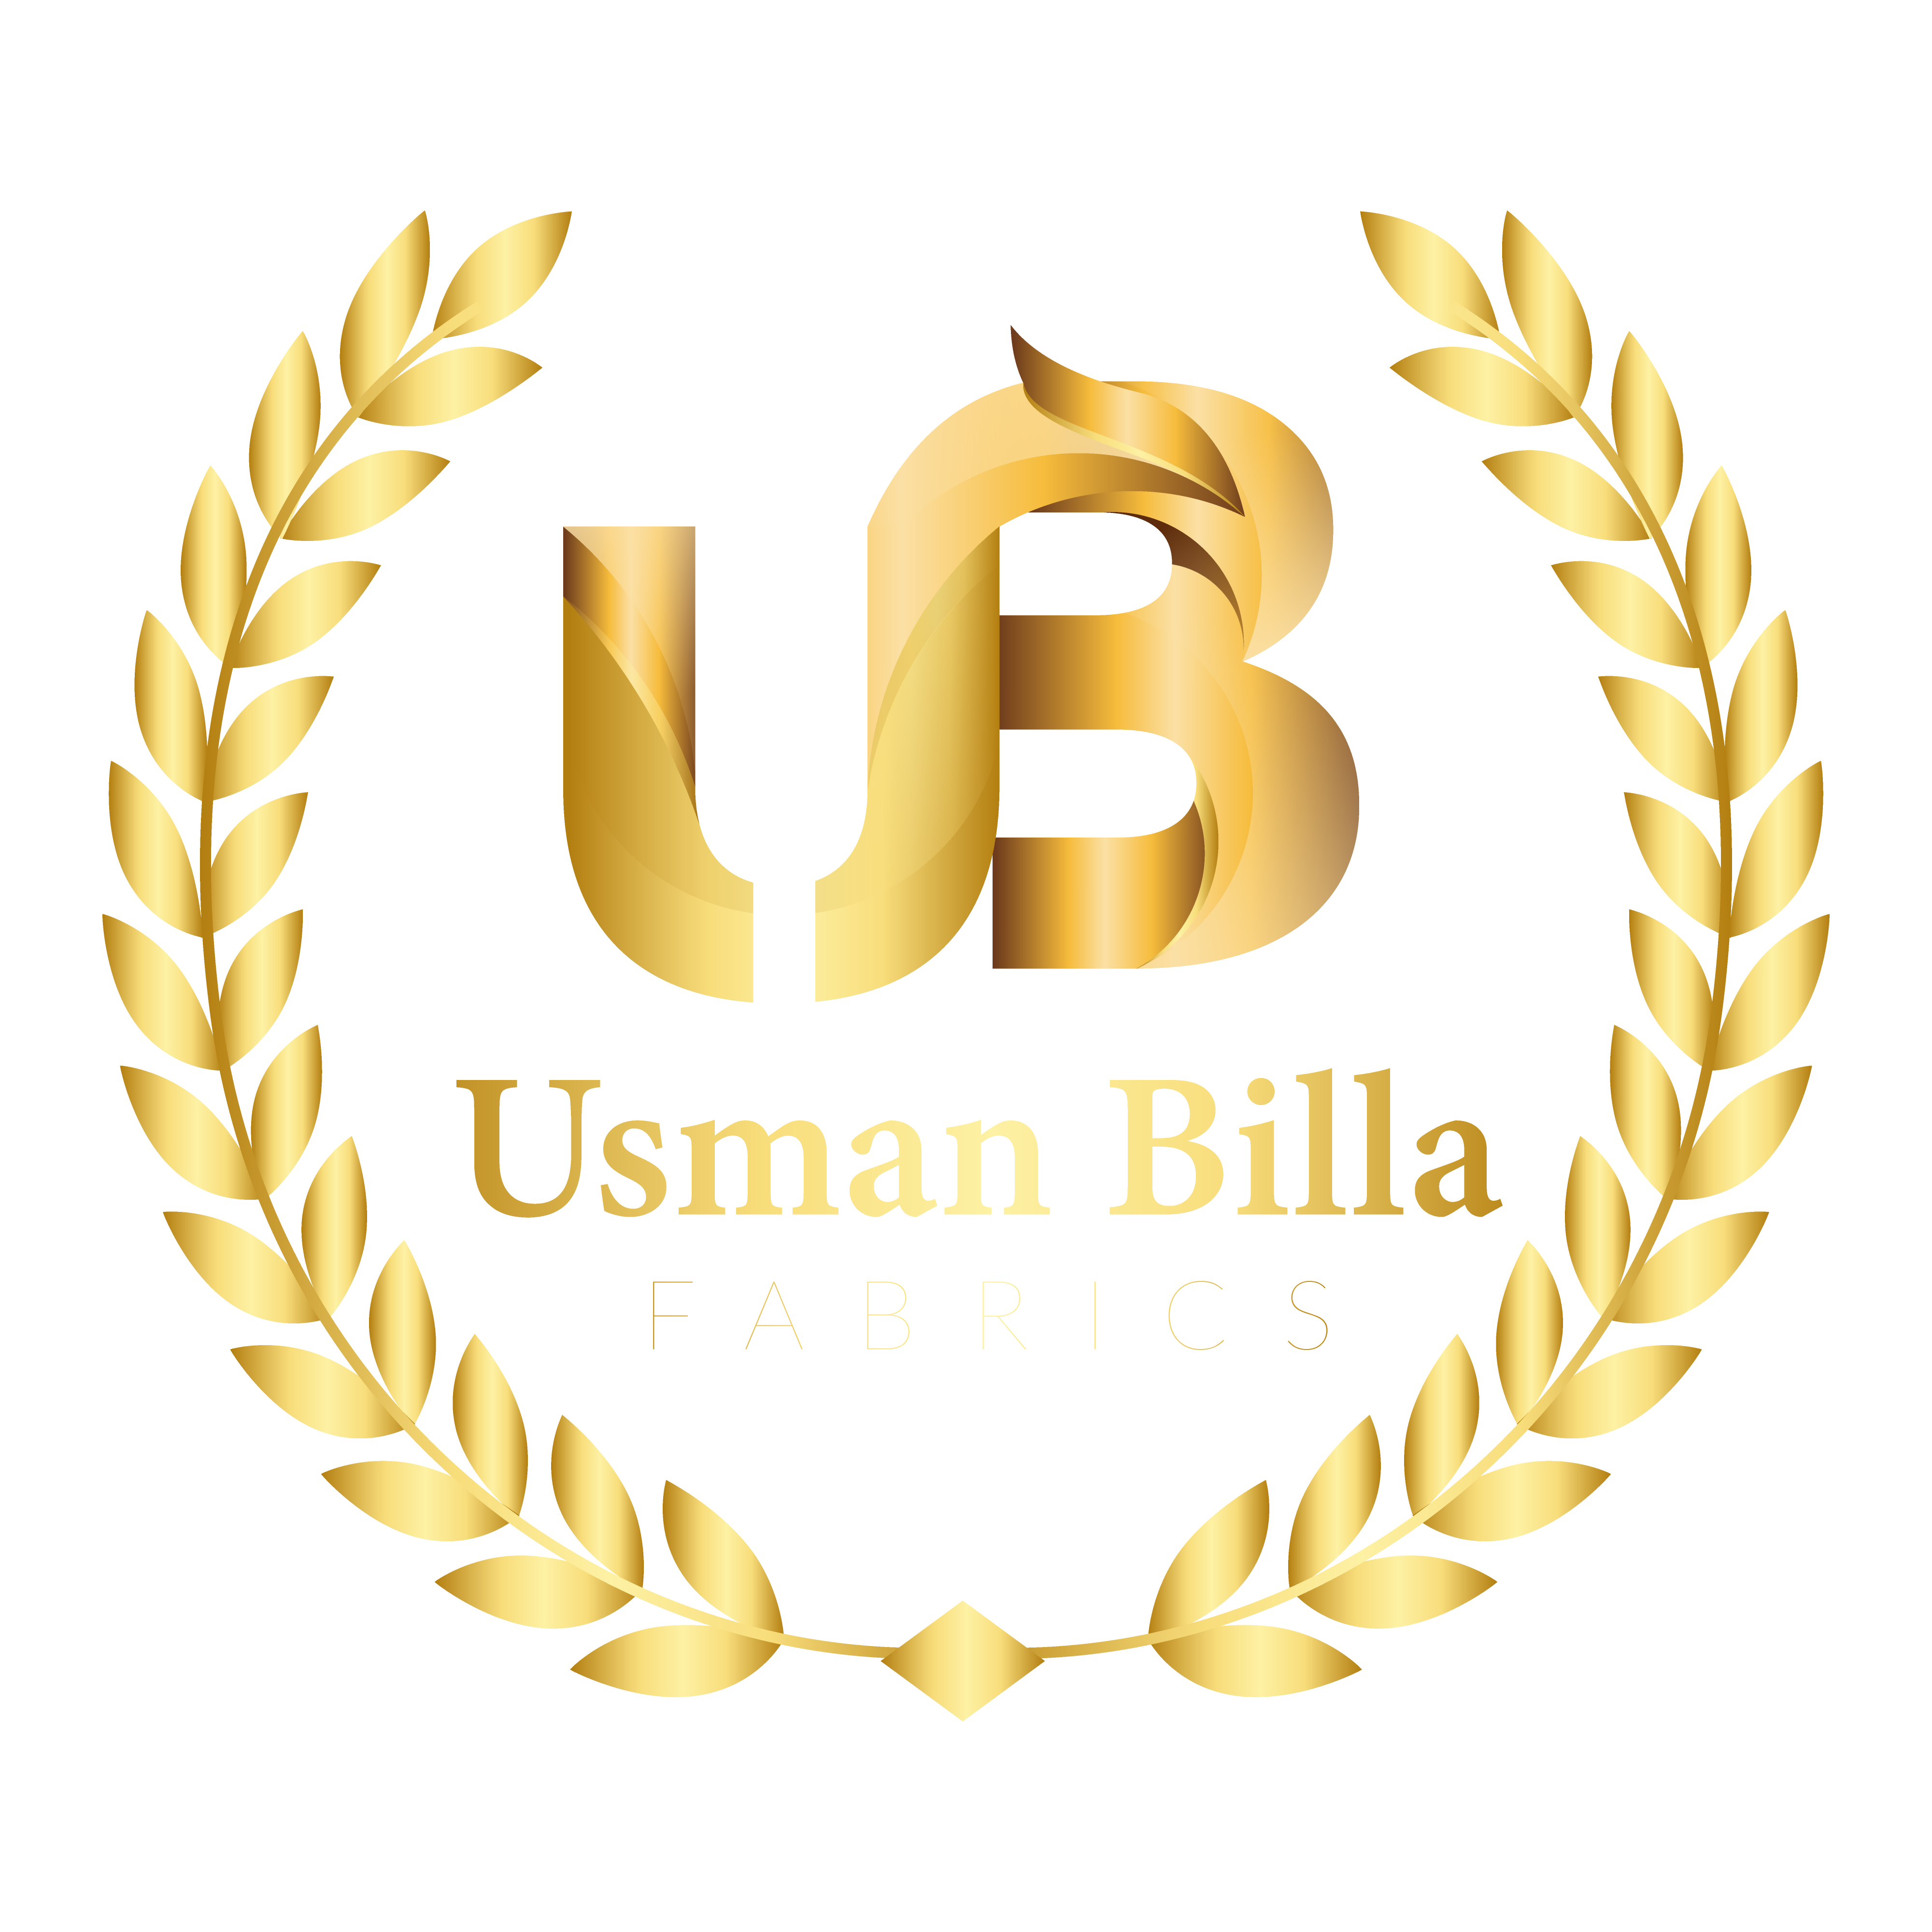 Usman Billa fabrics